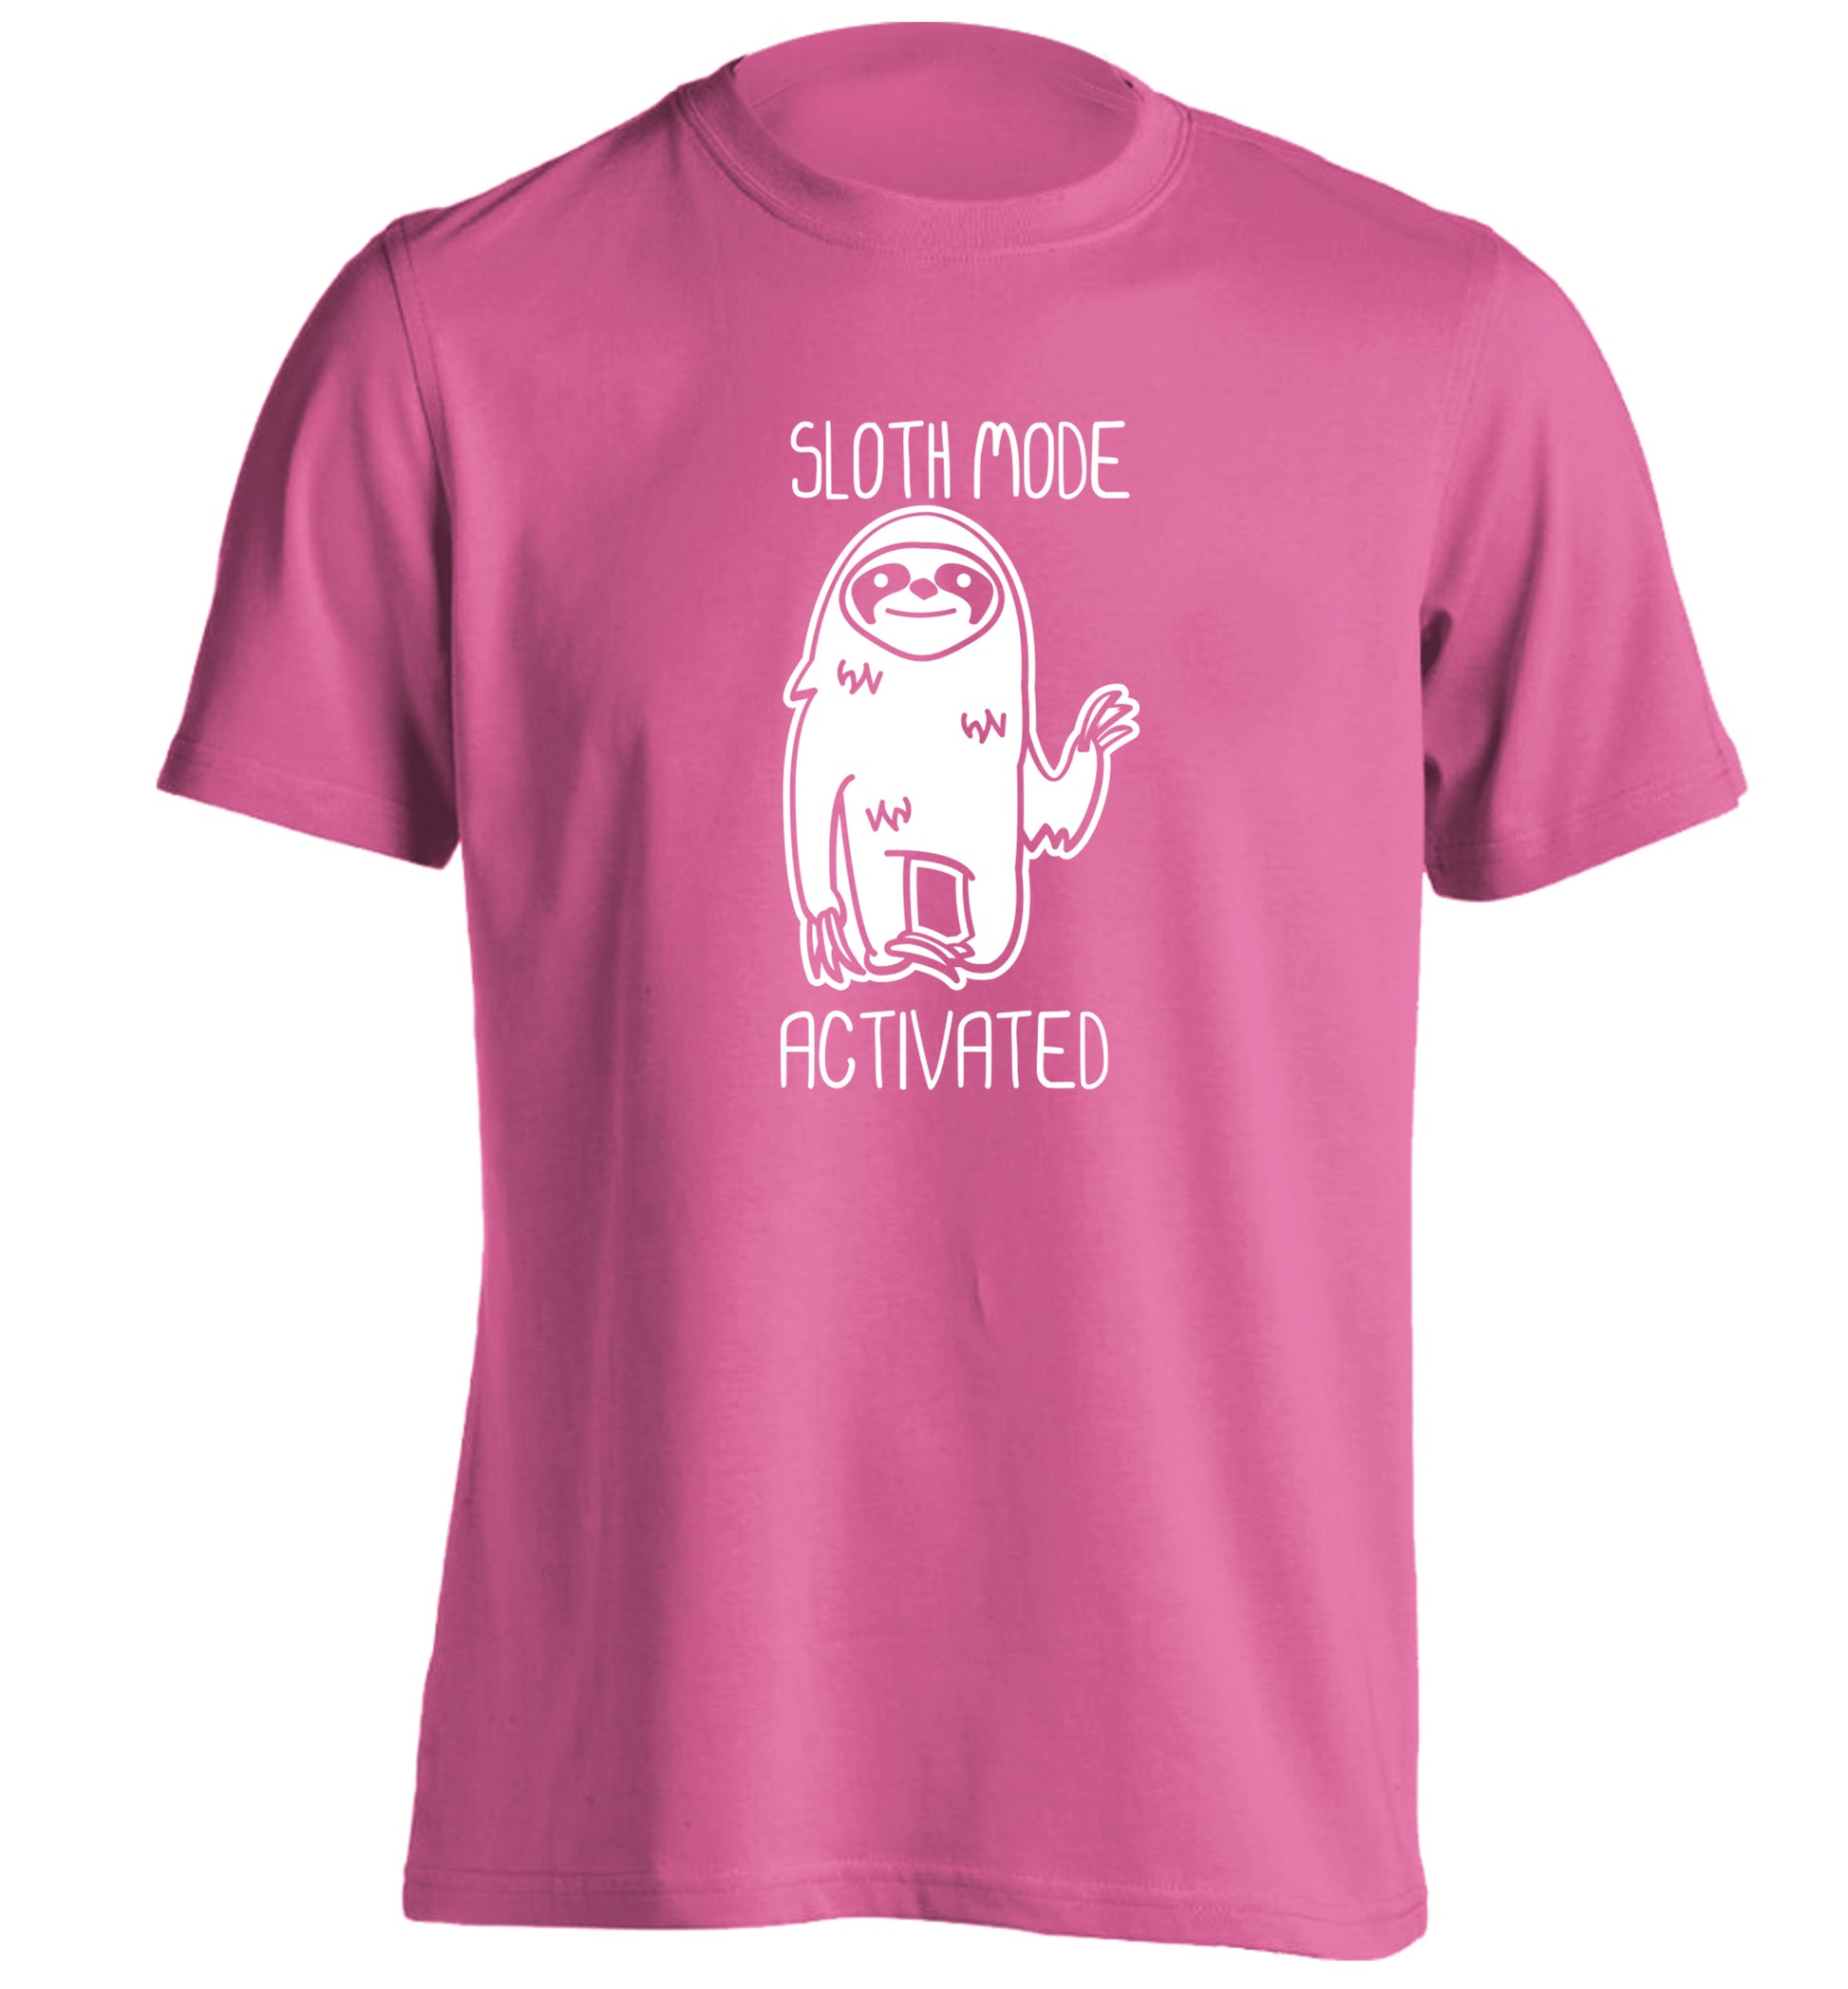 Sloth mode acitvated adults unisex pink Tshirt 2XL